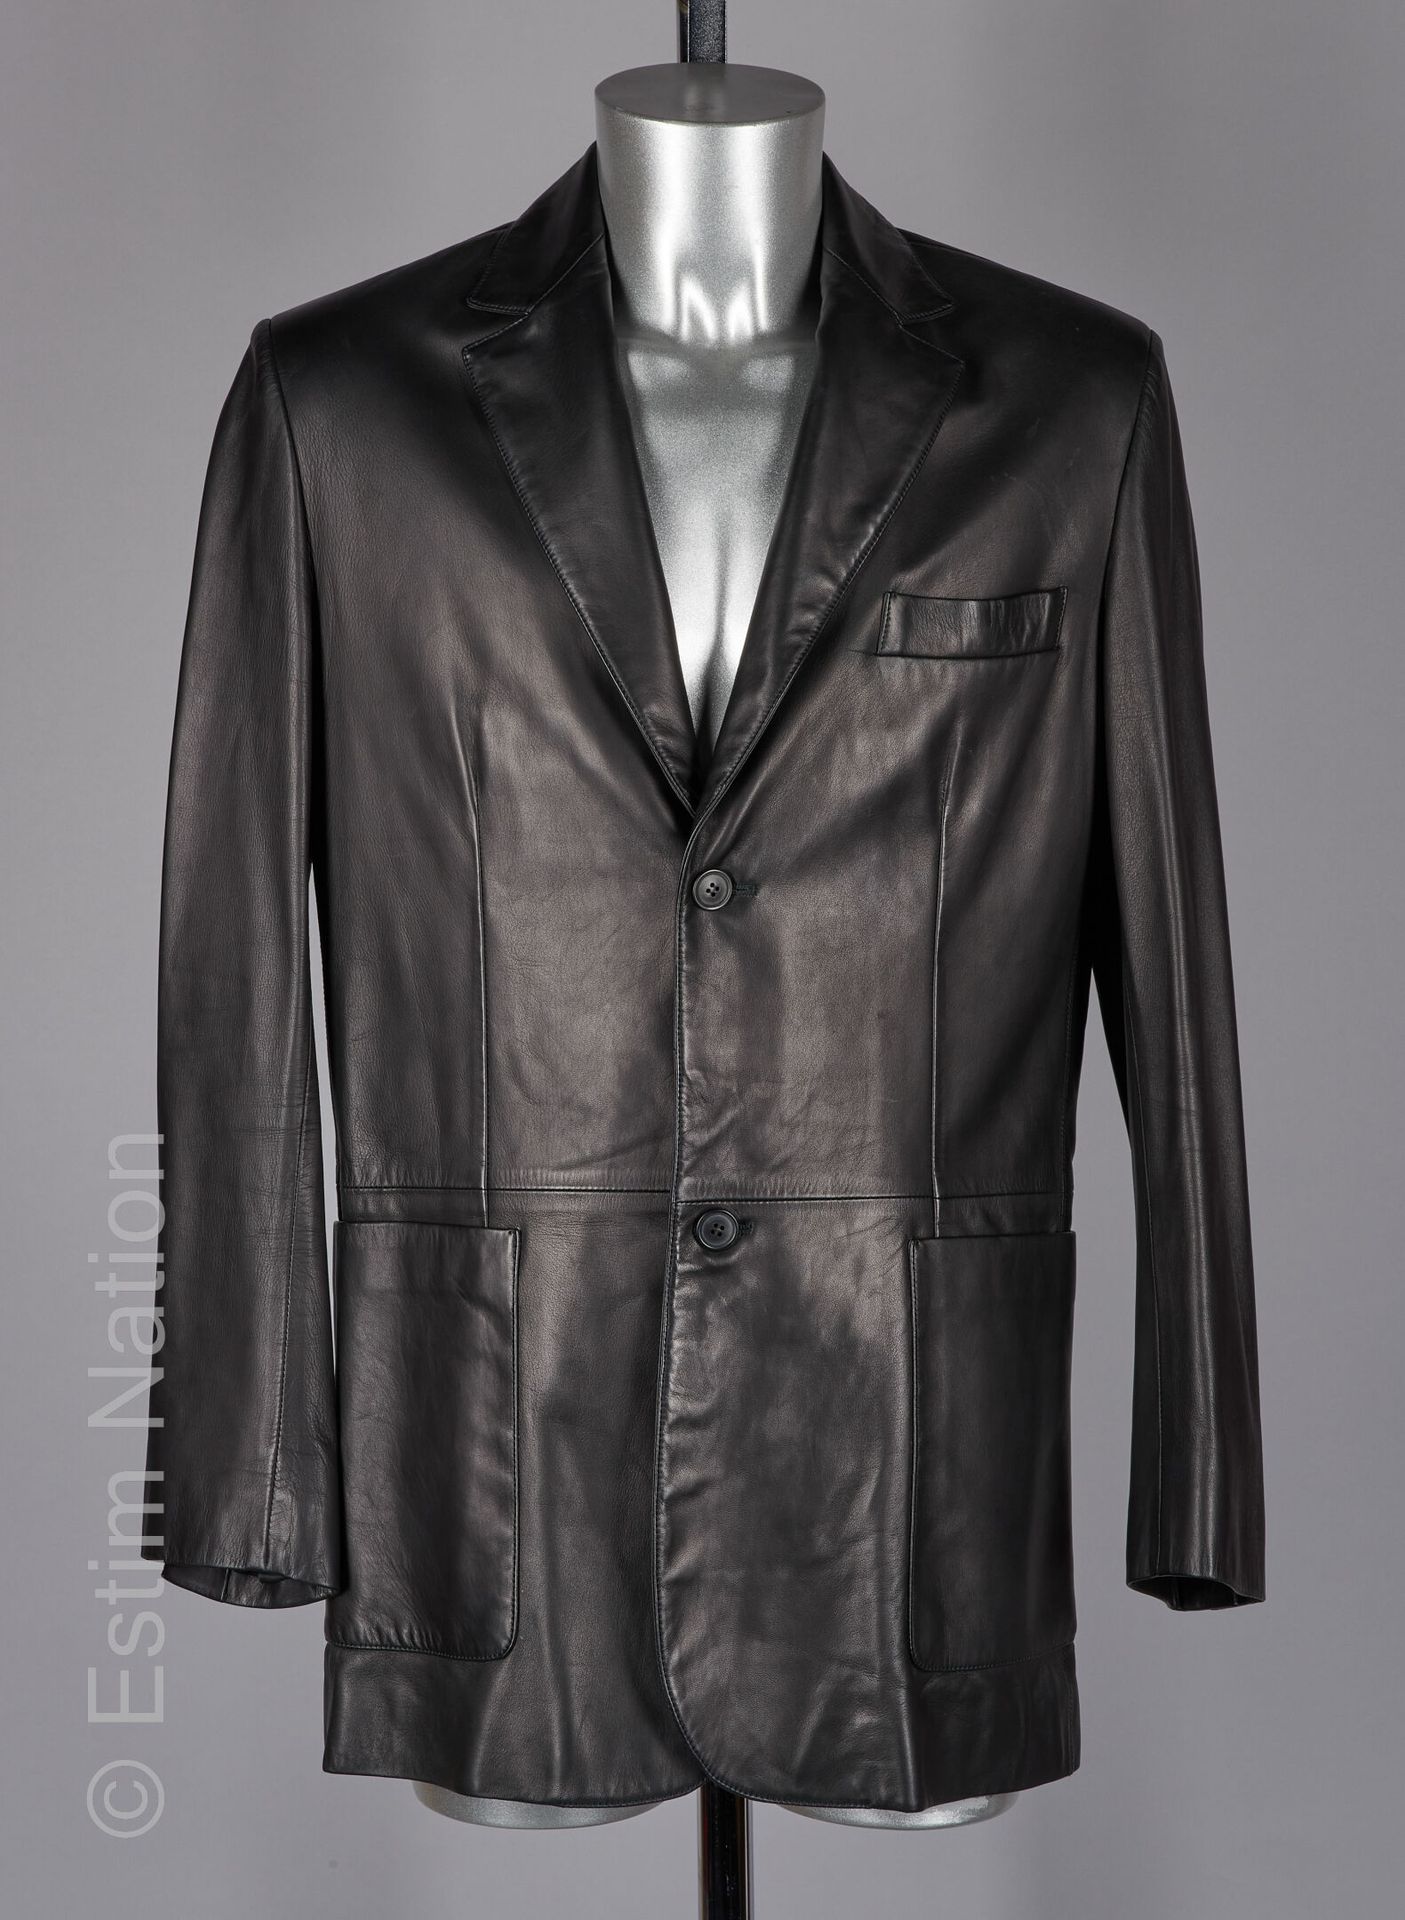 MANUFACTURE SERAPHIN Jacket in black plunged lambskin, three pockets (S 52) (lin&hellip;